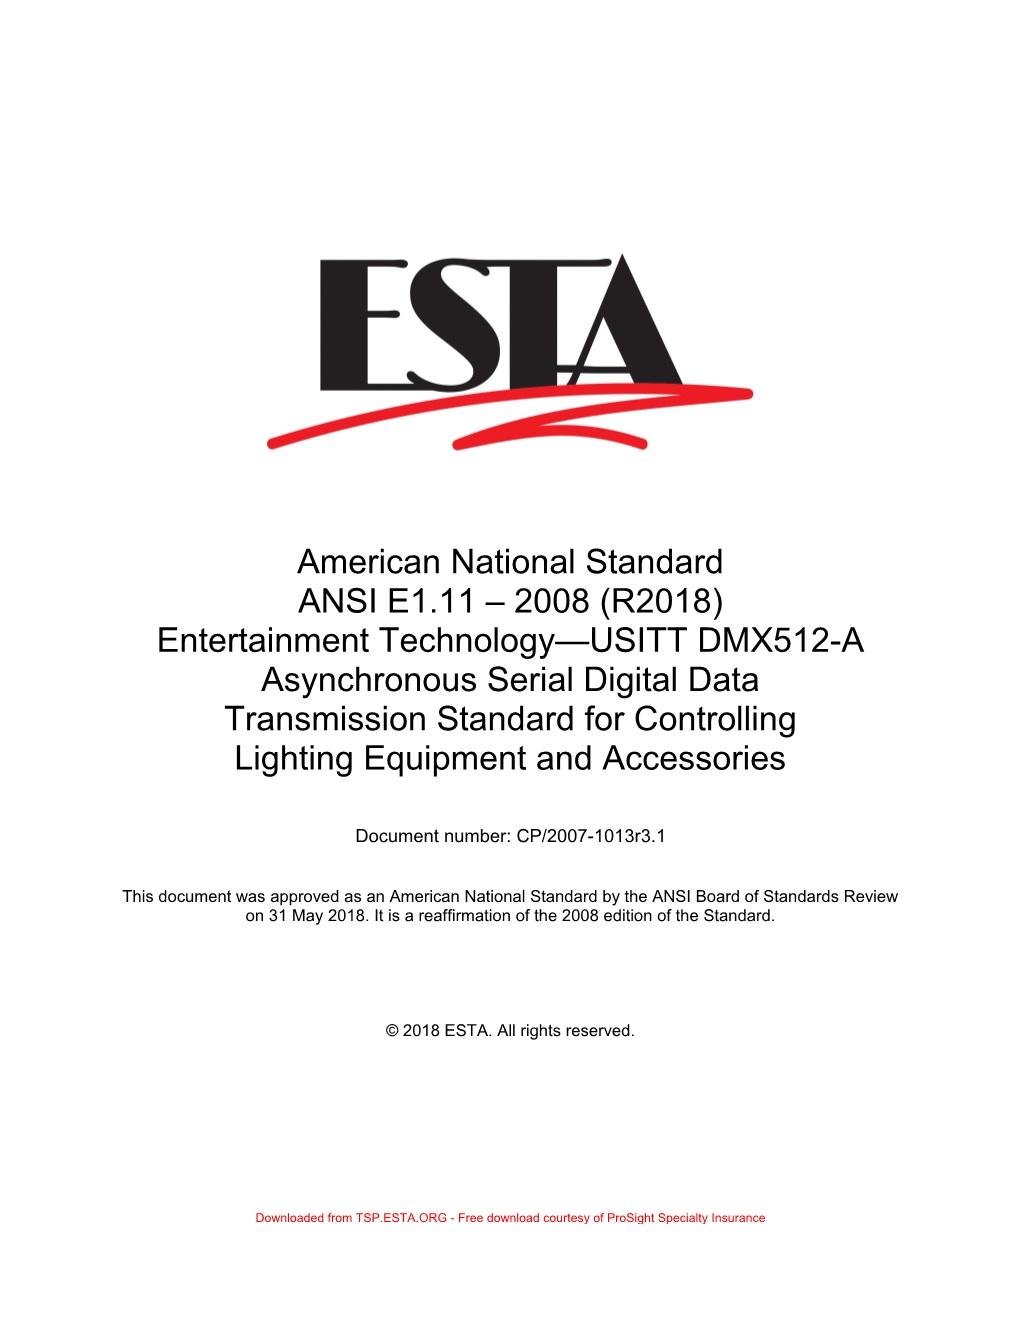 American National Standard ANSI